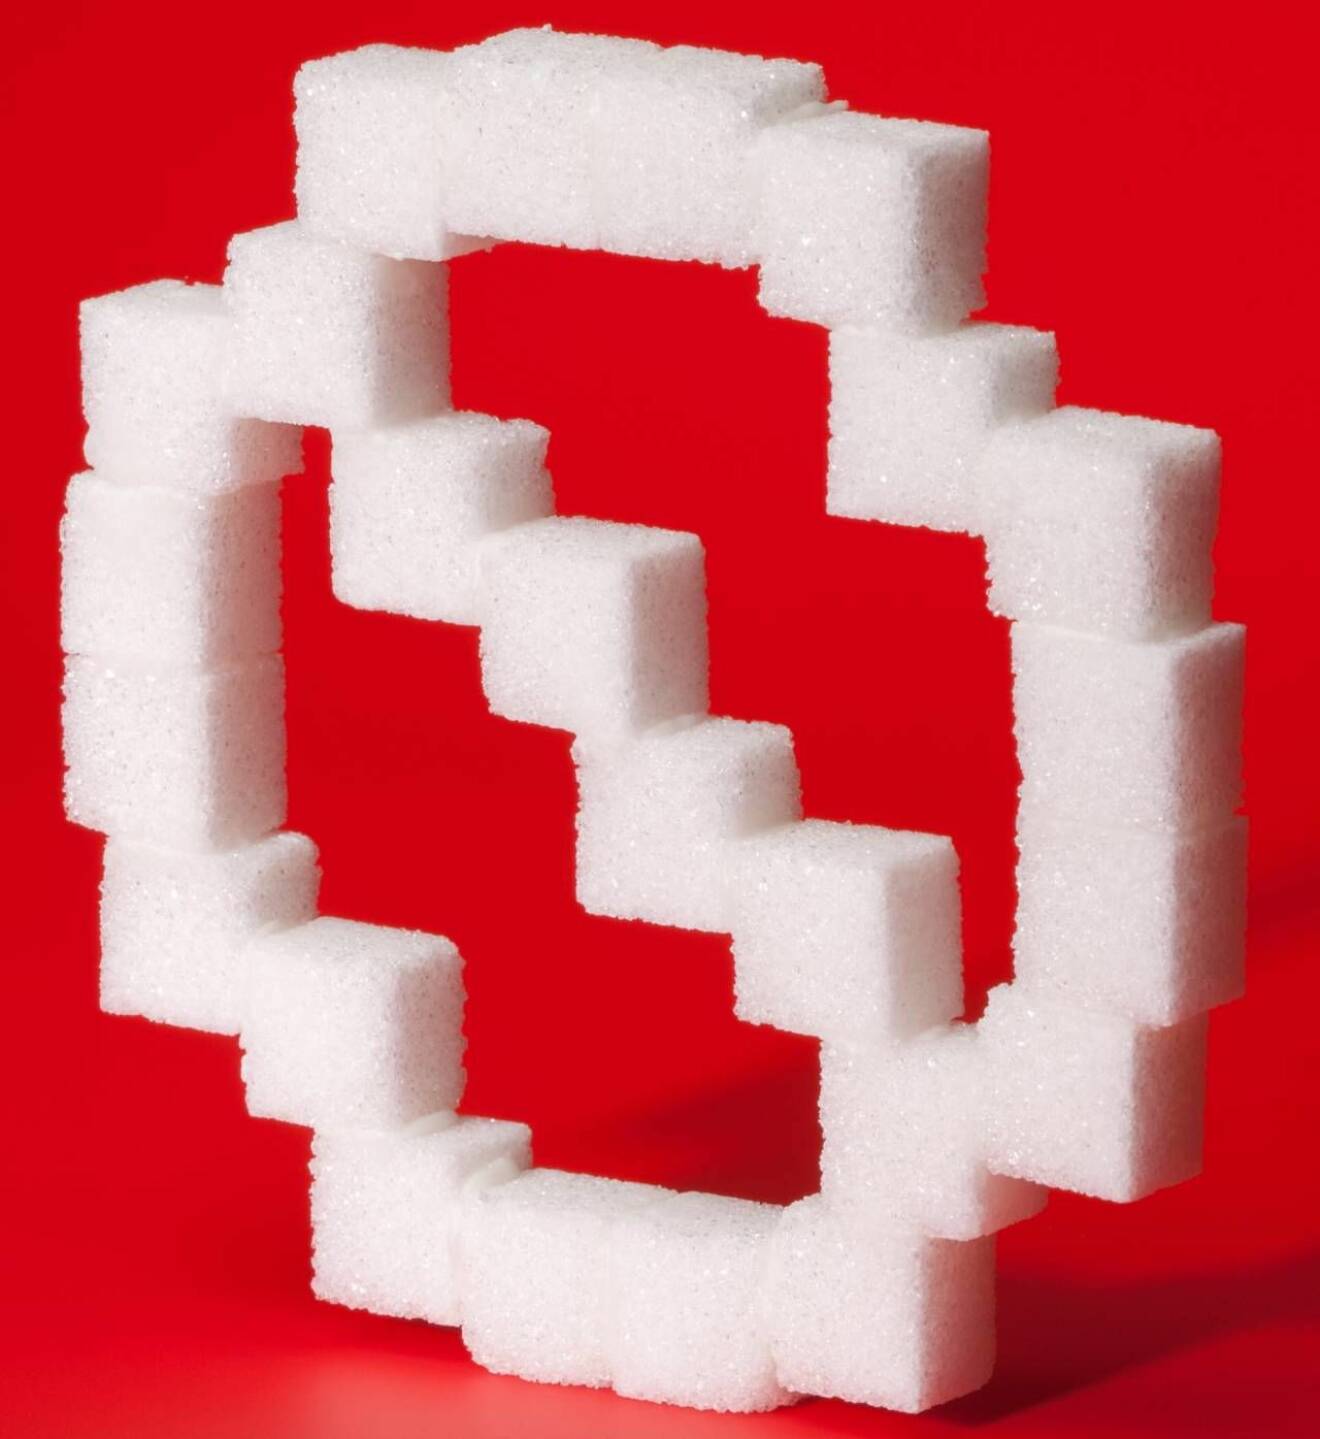 Figur byggd av sockerbitar